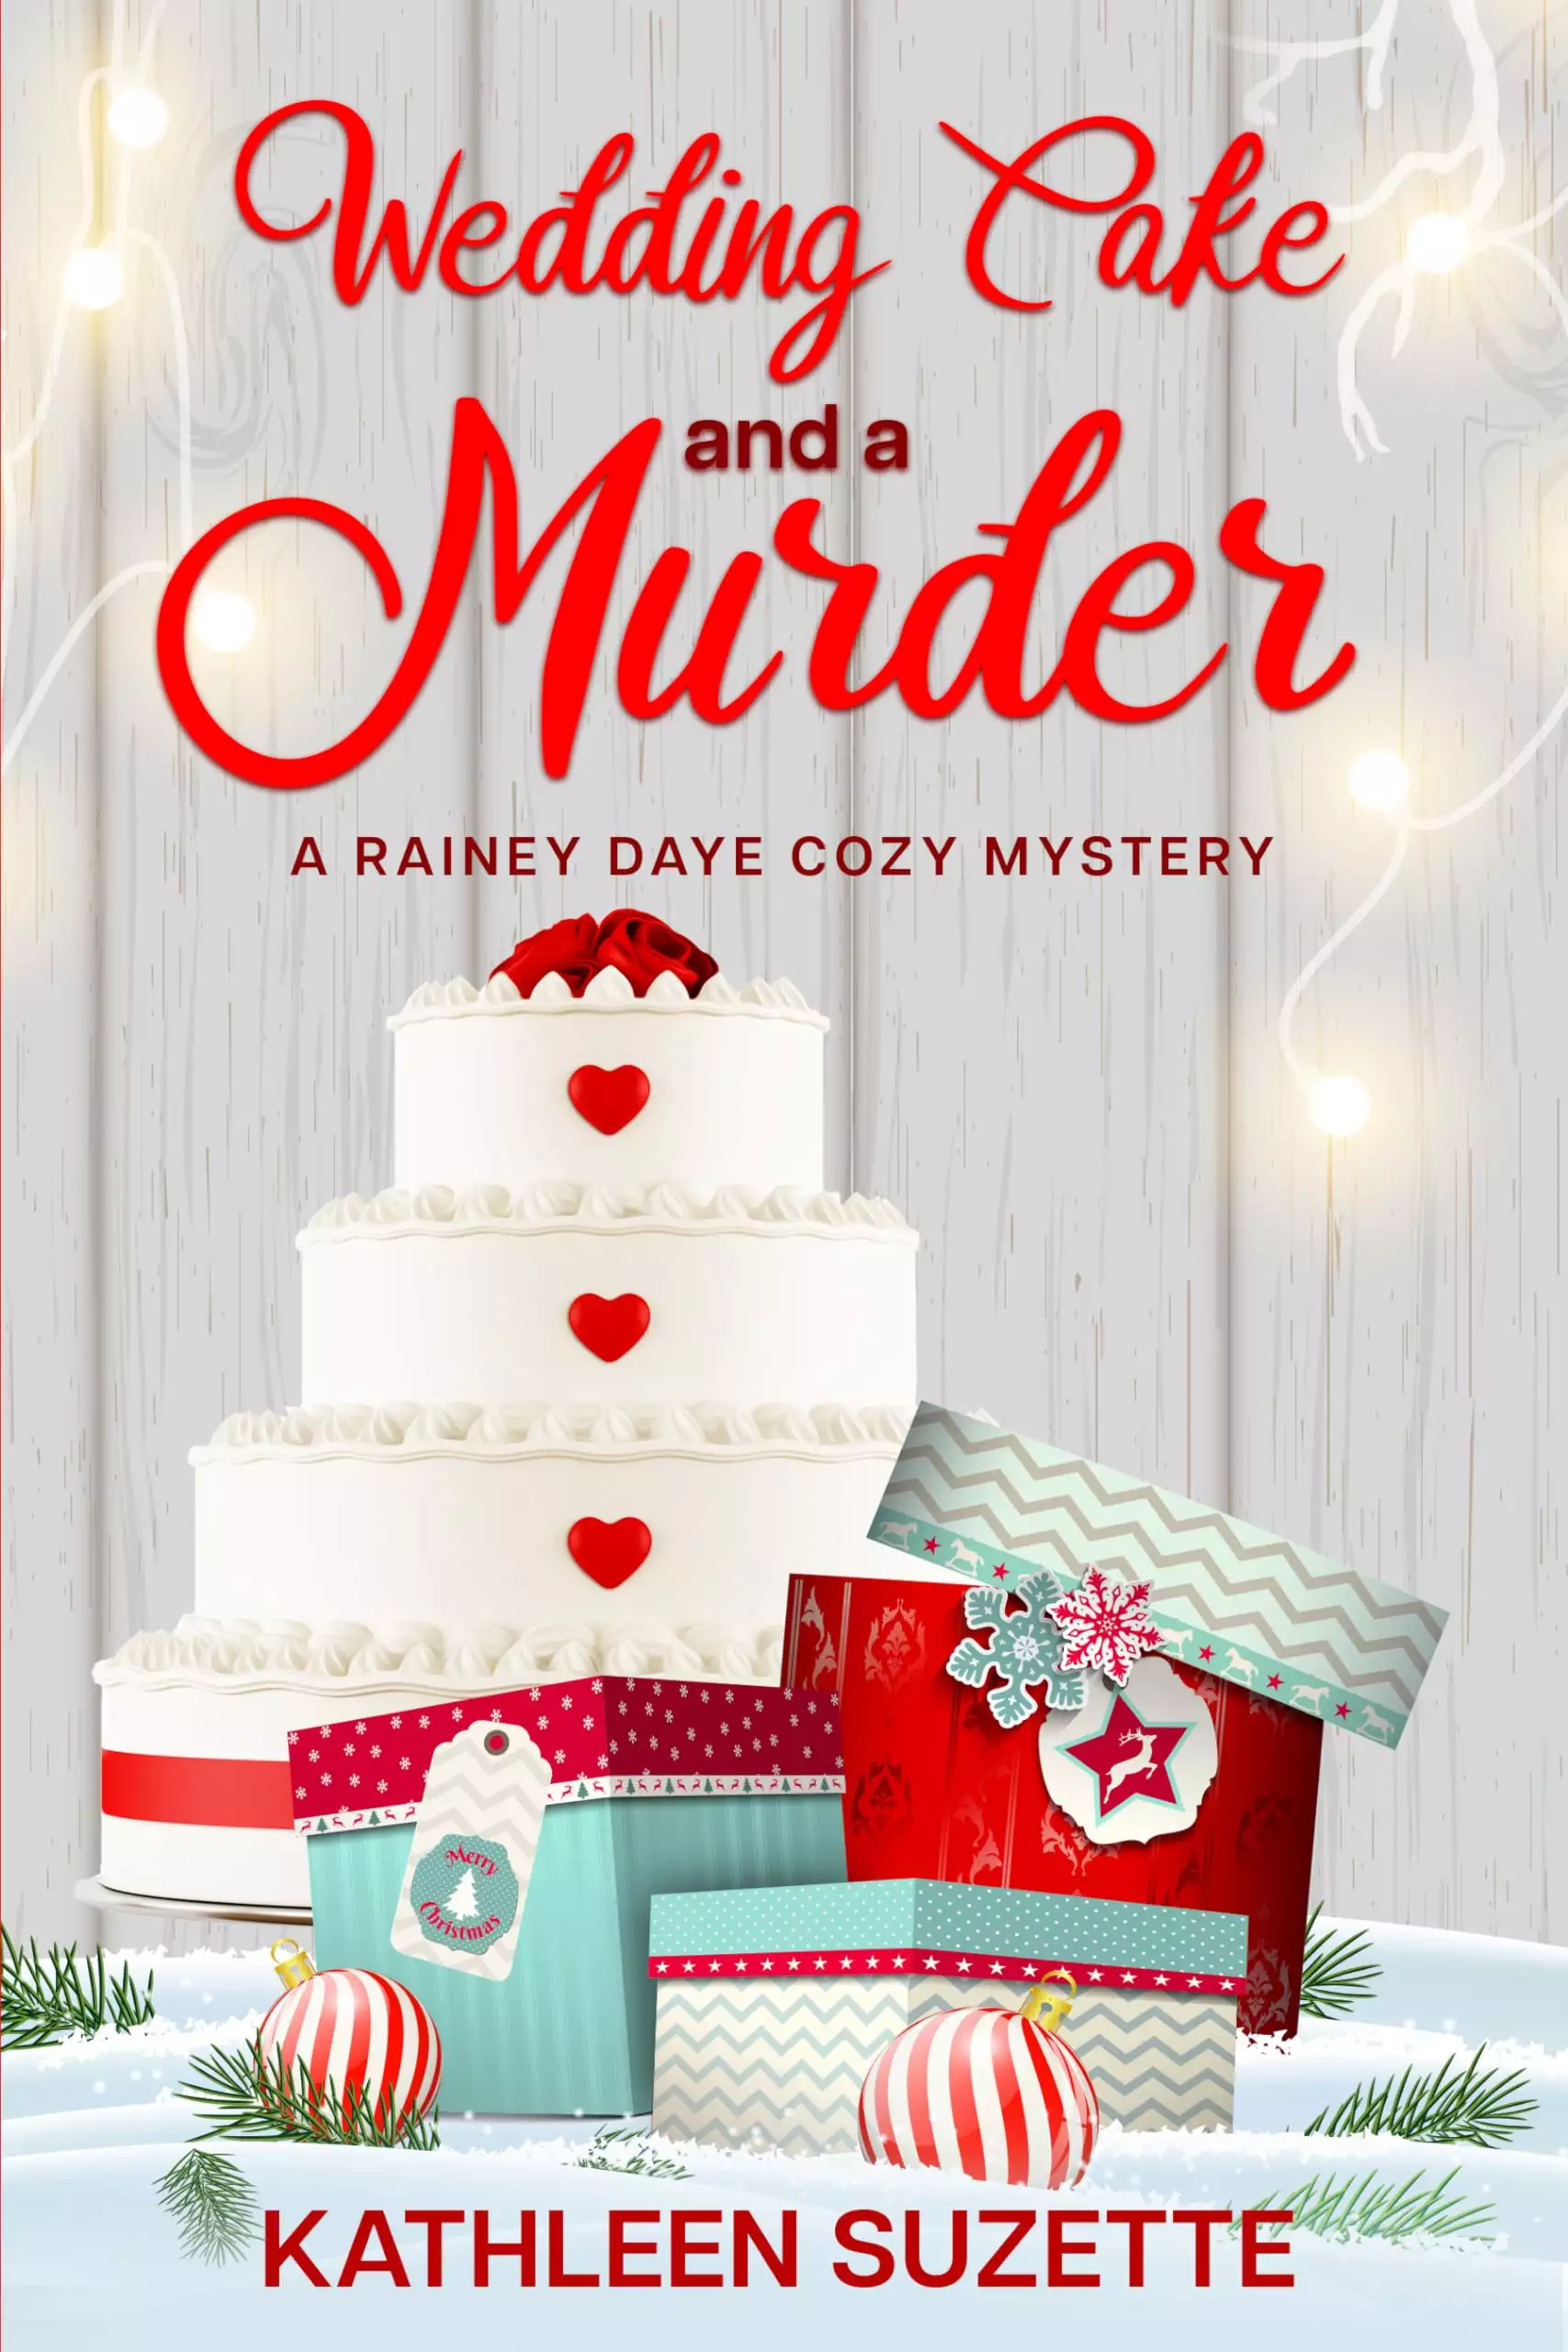 Wedding Cake and a Murder: A Rainey Daye Cozy Mystery